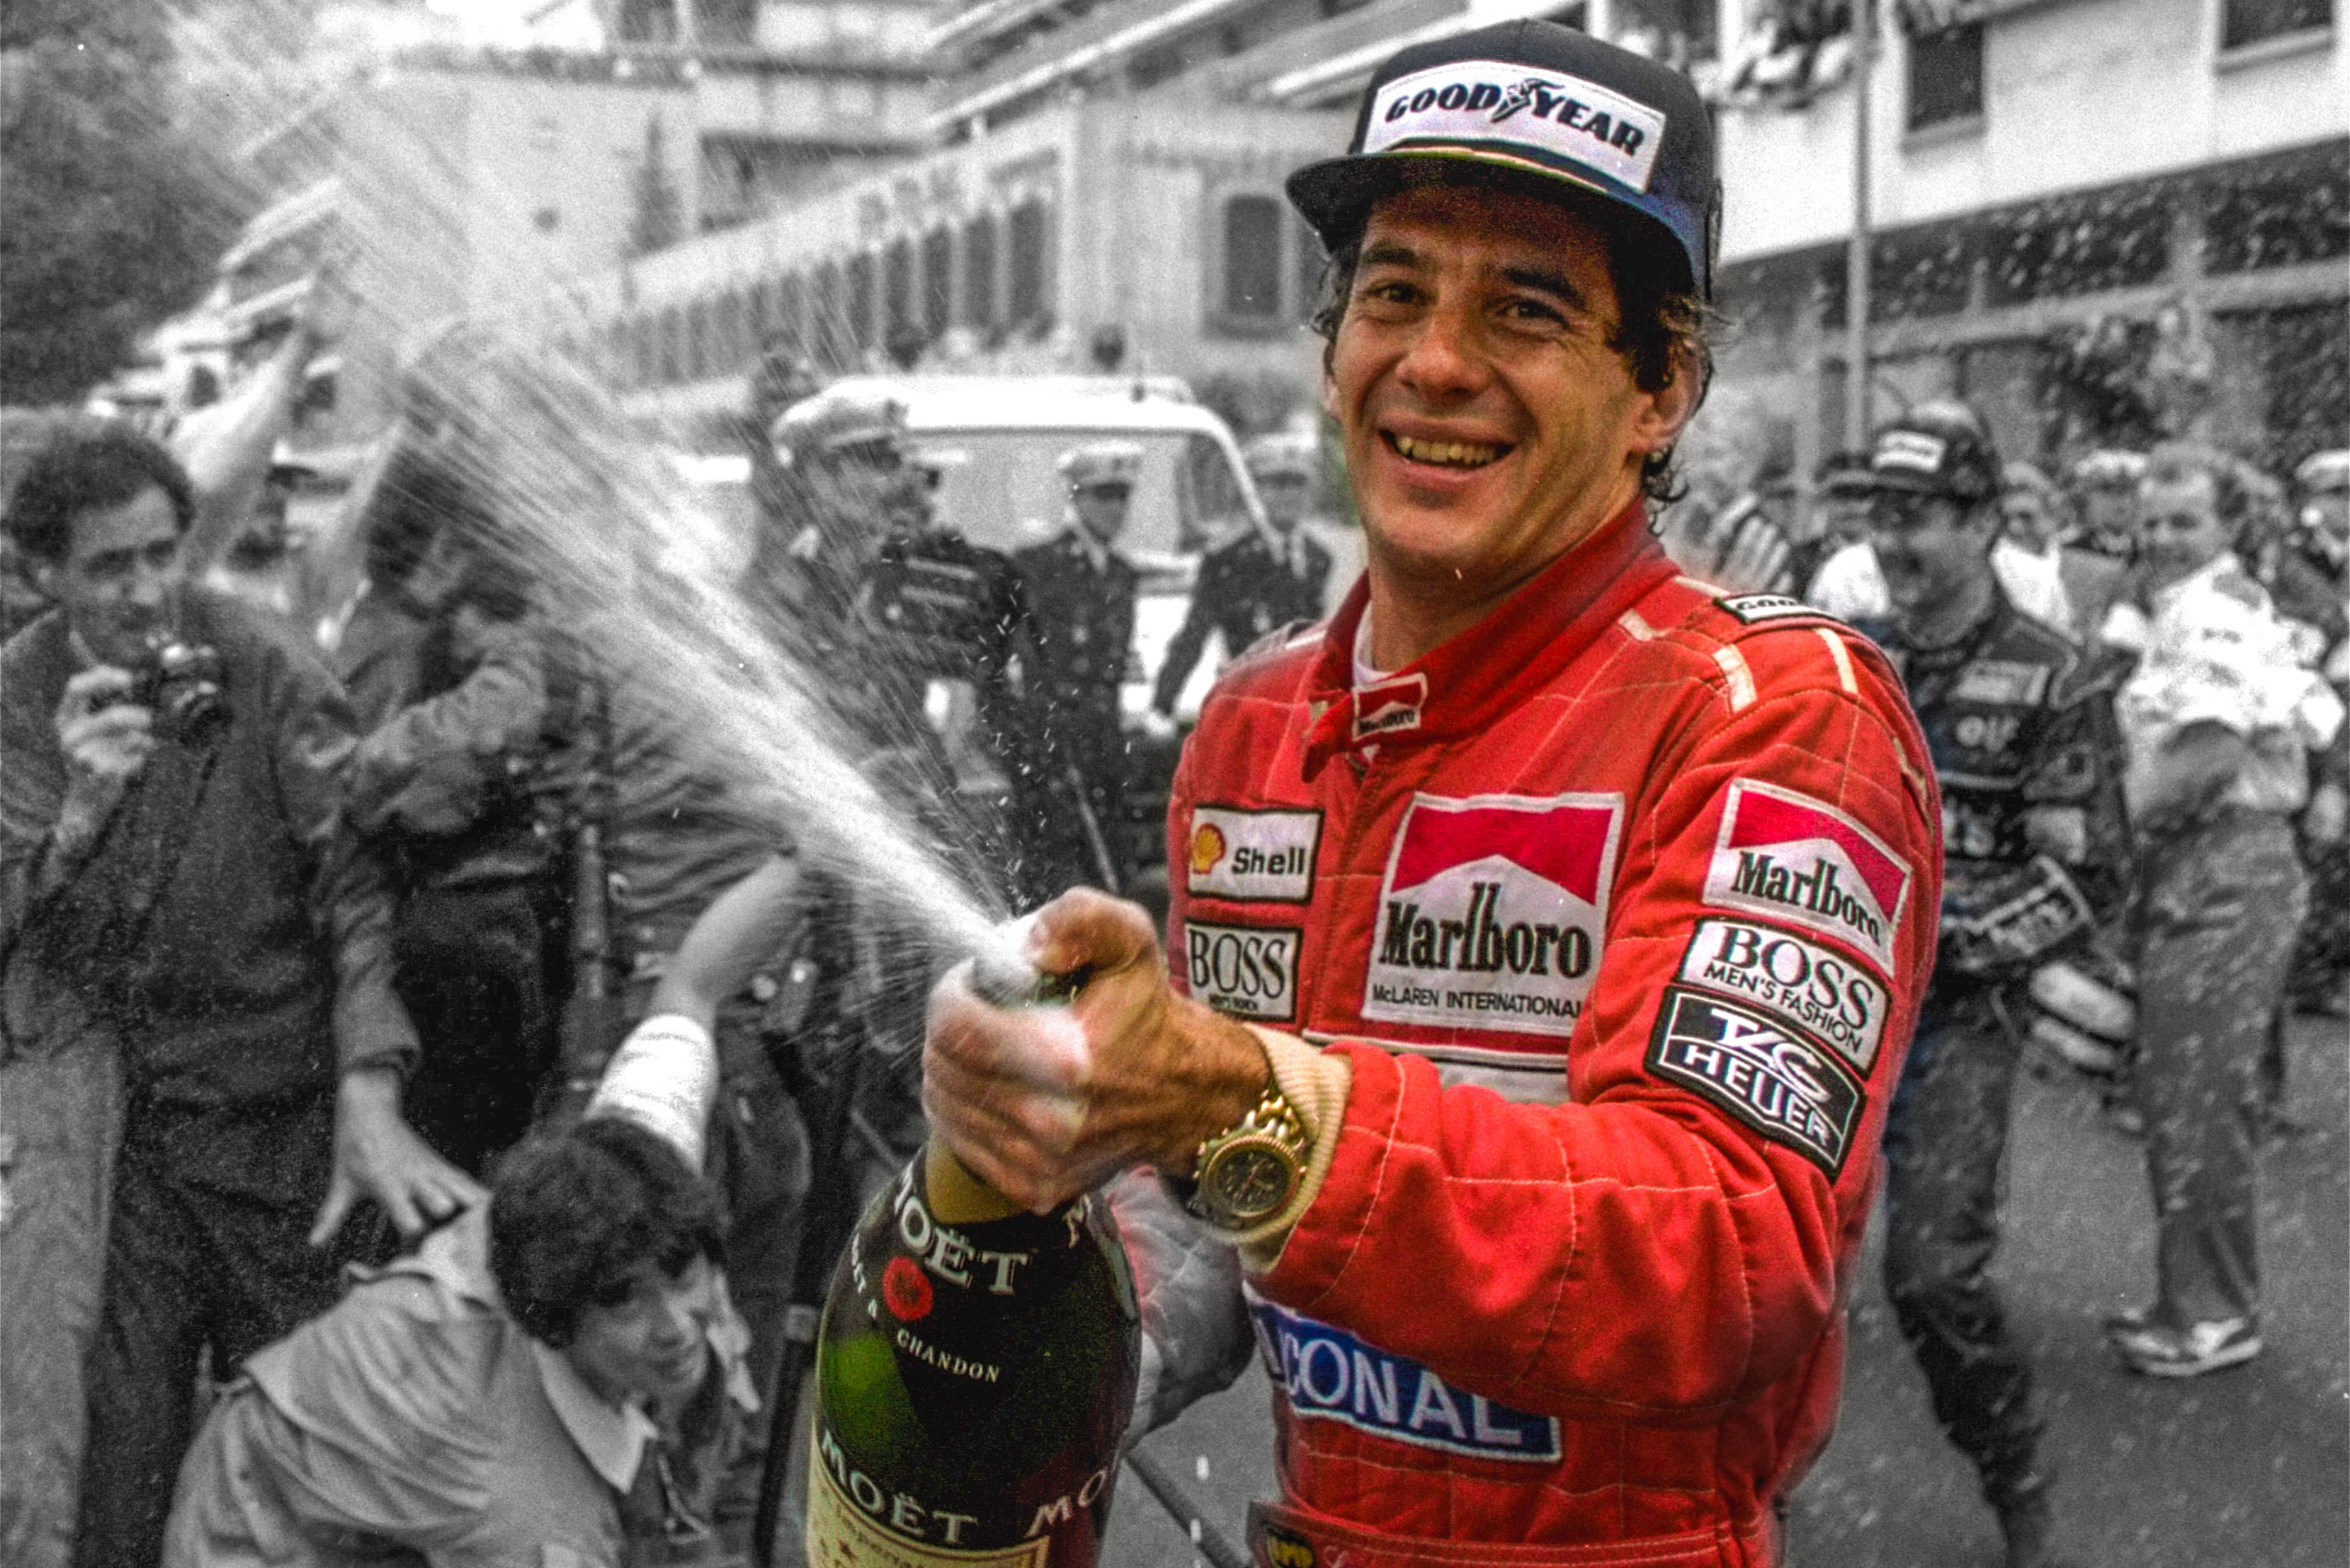 Ayrton Senna's 21-year-old Legacy takes the spotlight on social media -  Ayrton Senna